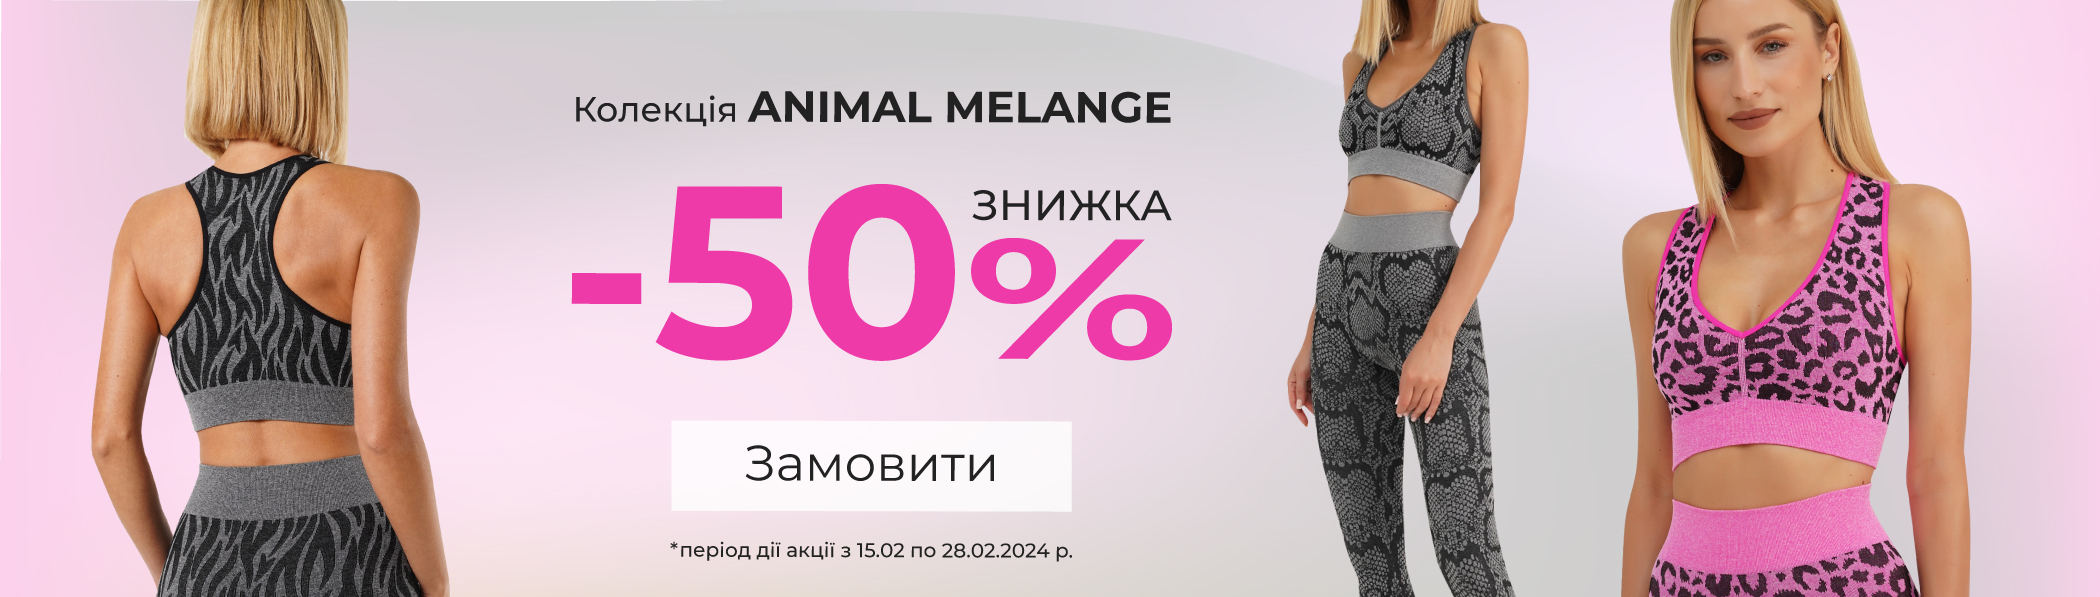 ANIMAL MELANGE -50%